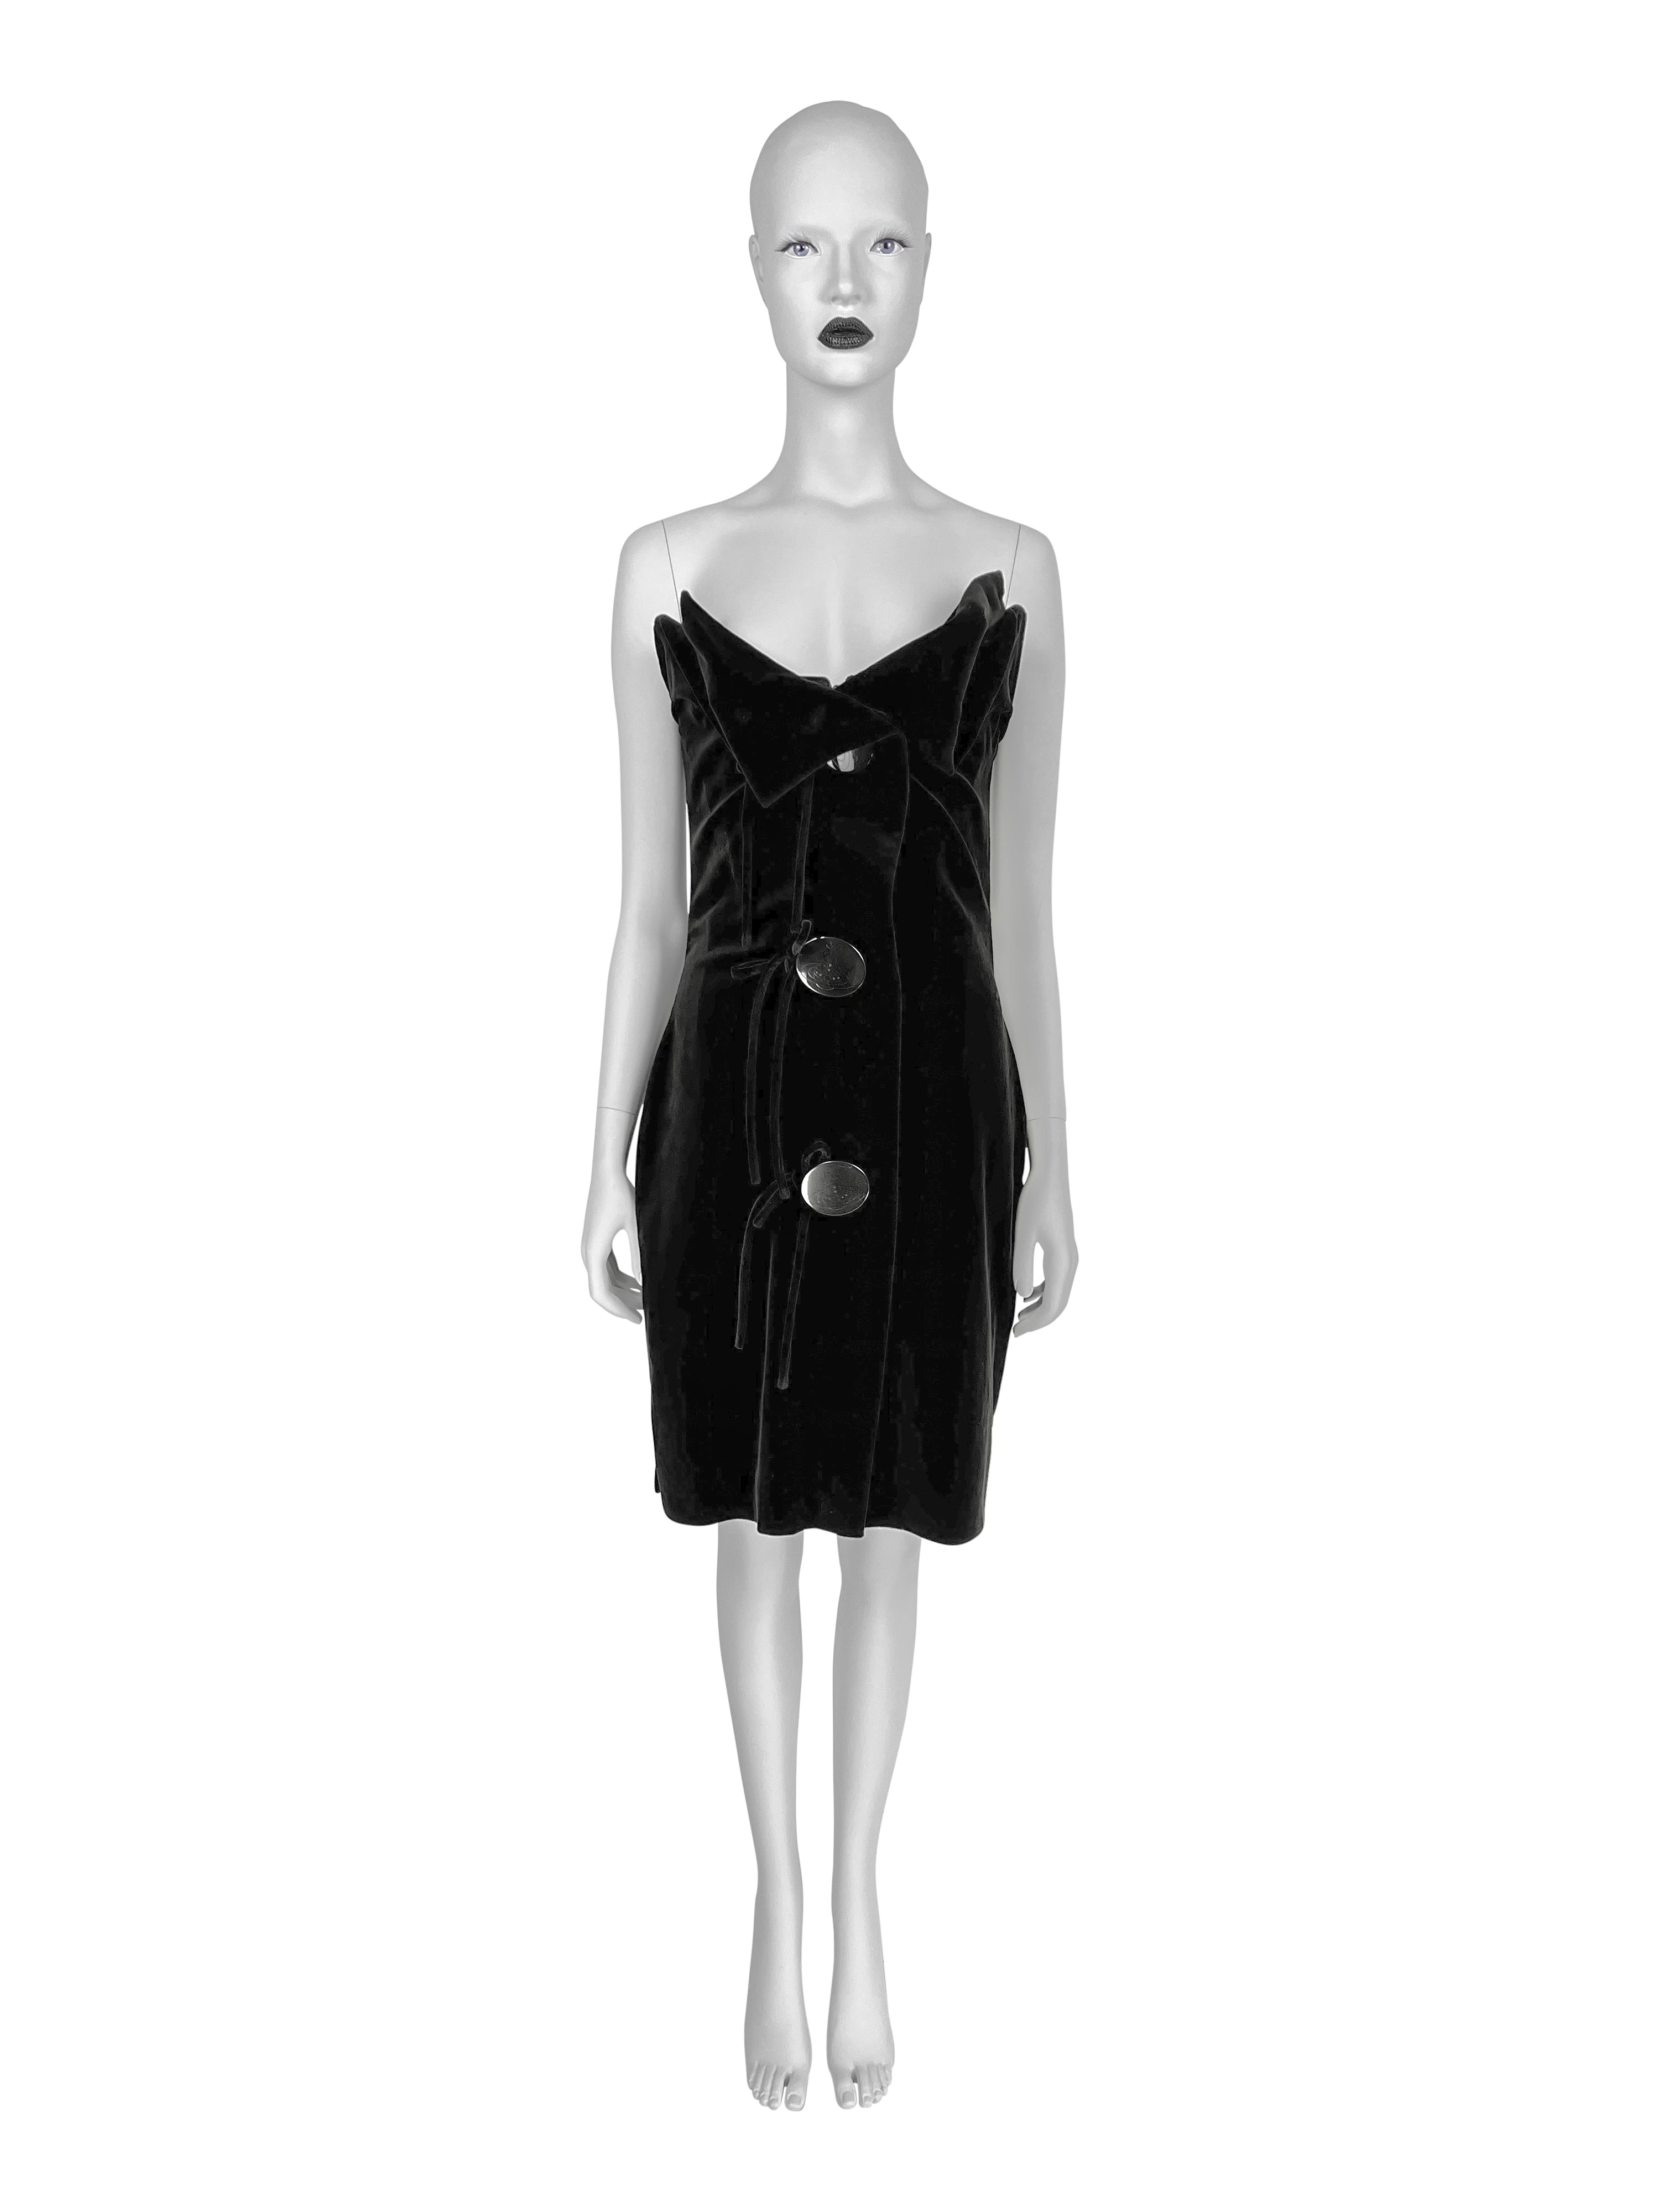 Vivienne Westwood Fall 1998 Corseted Velvet Dress